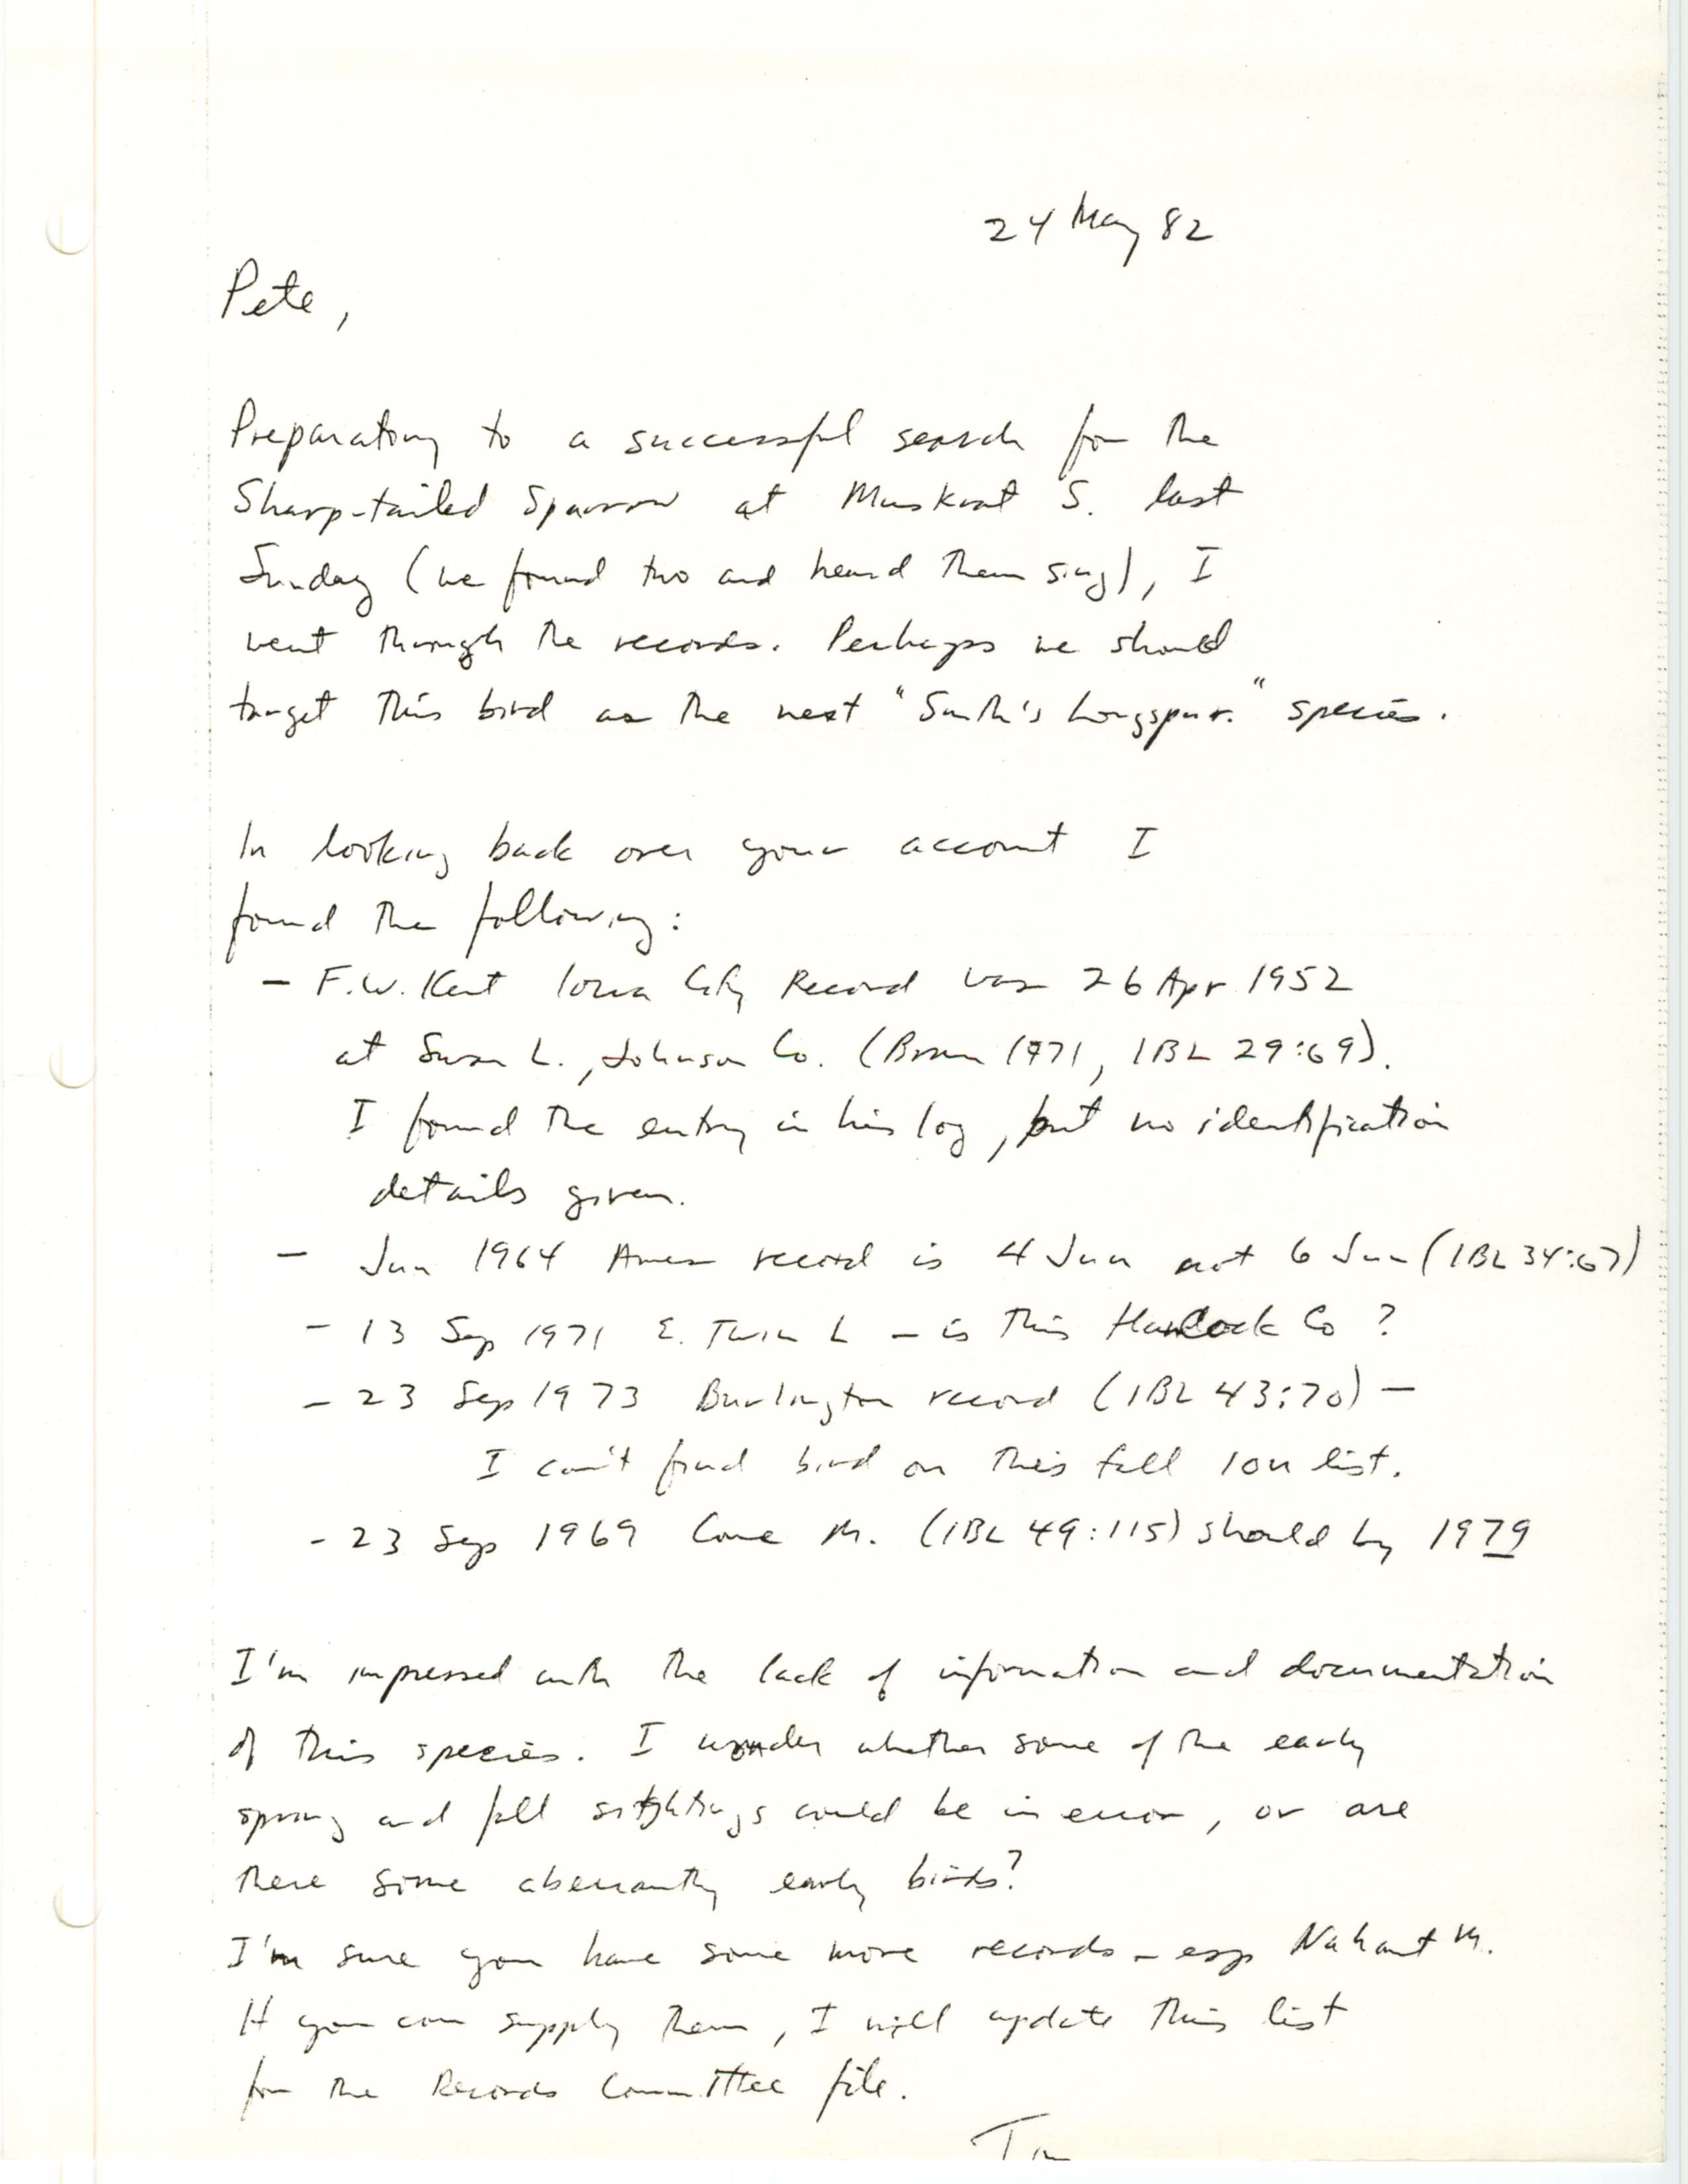 Thomas Kent letter to Peter C. Petersen regarding Sharp-tailed Sparrow sightings in Iowa, May 24, 1982